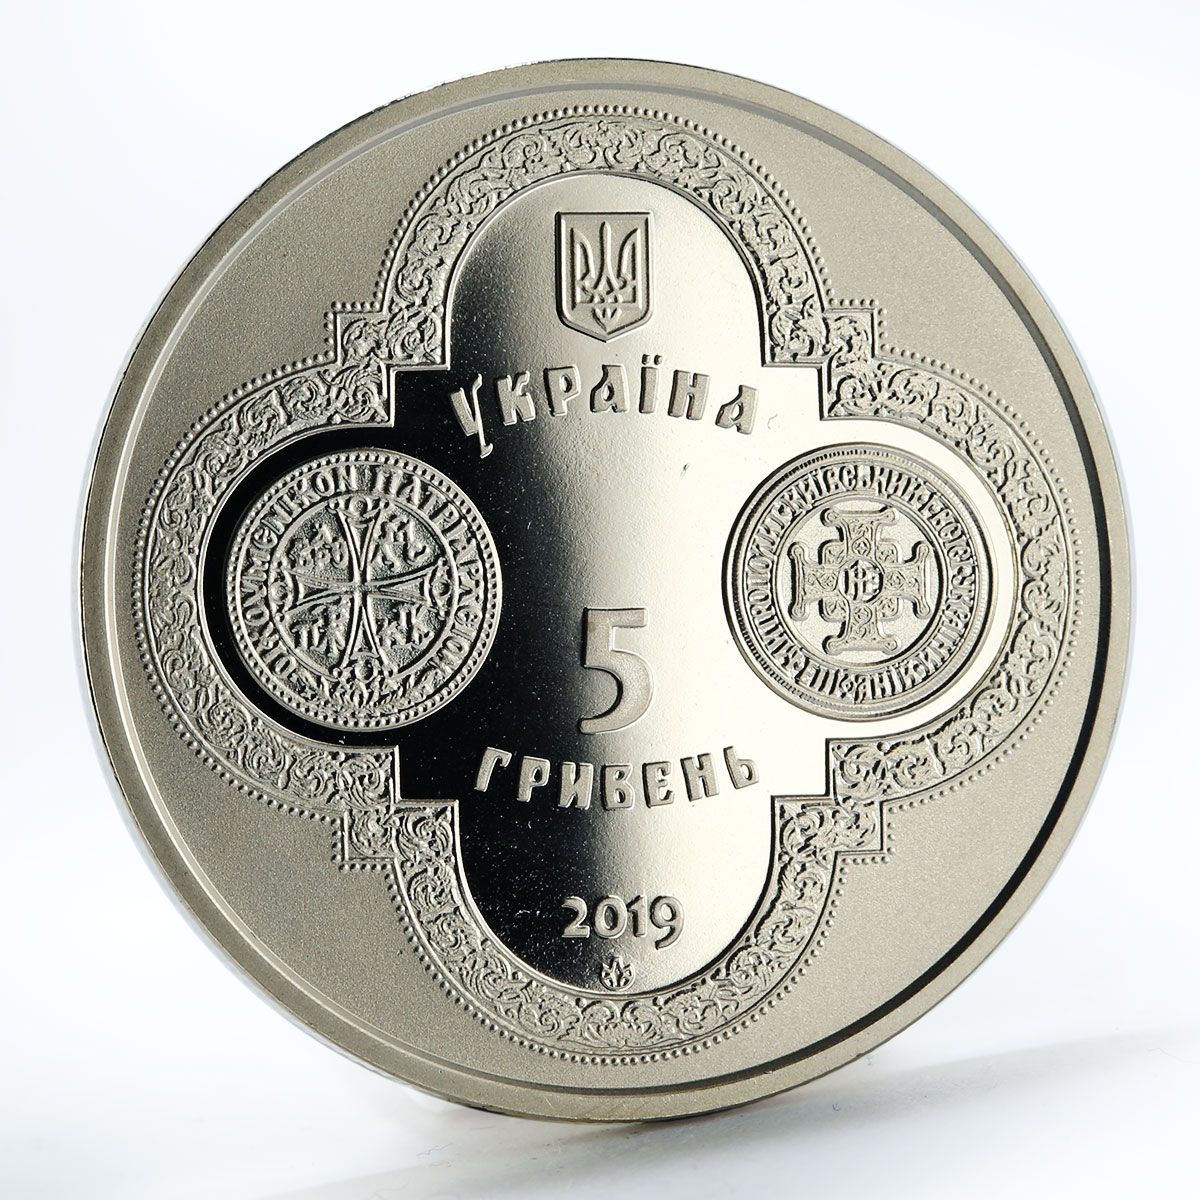 Ukraine 5 hryvnias Autocephaly of Orthodox Church of Ukraine nickel coin 2019